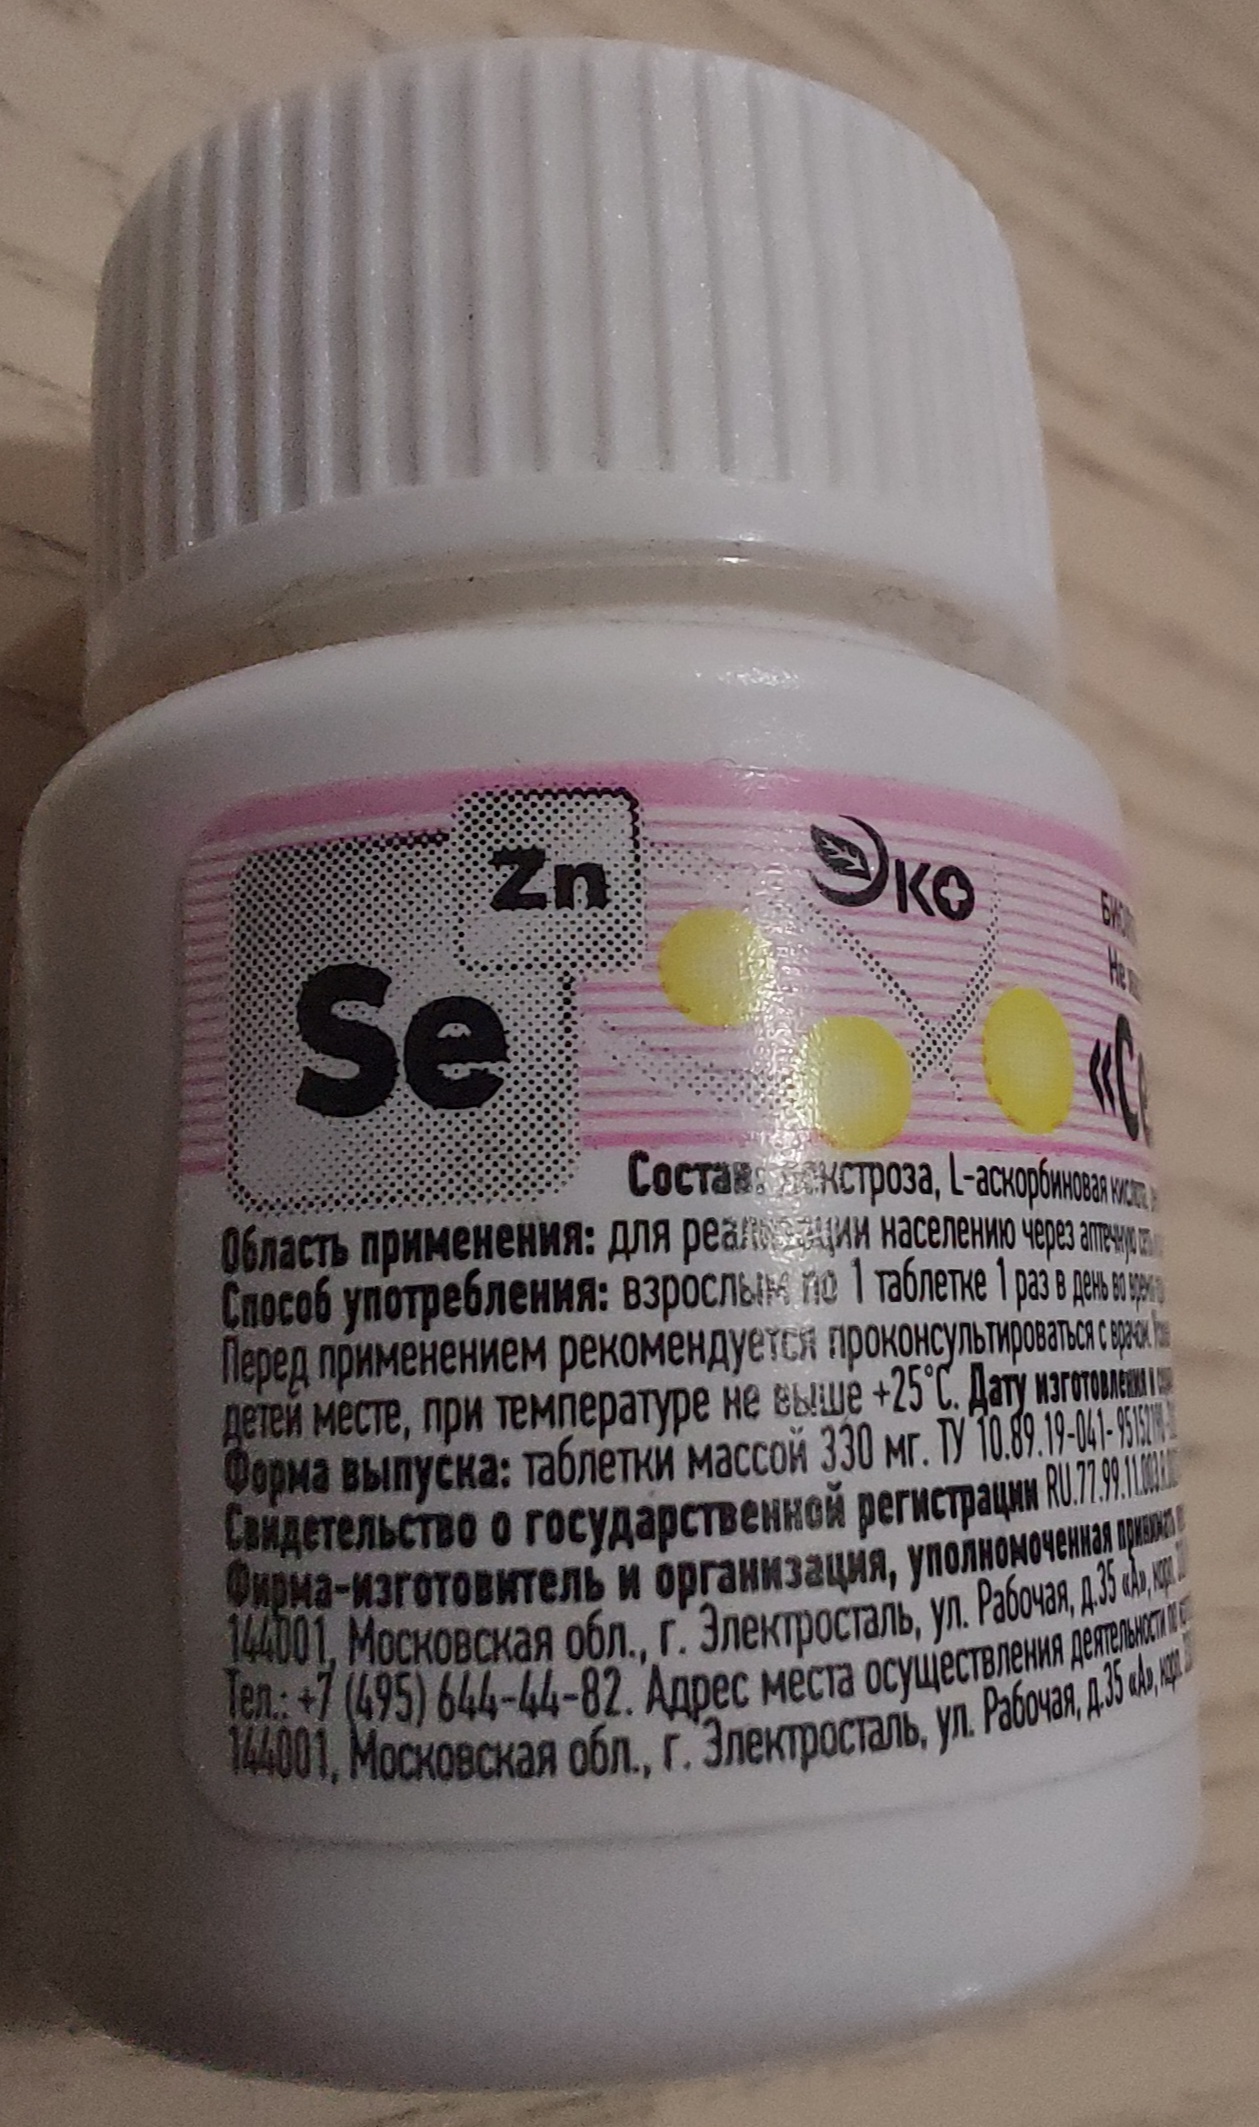 Фотография покупателя товара Селен + цинк Экотекс, 30 таблеток по 0,33 г